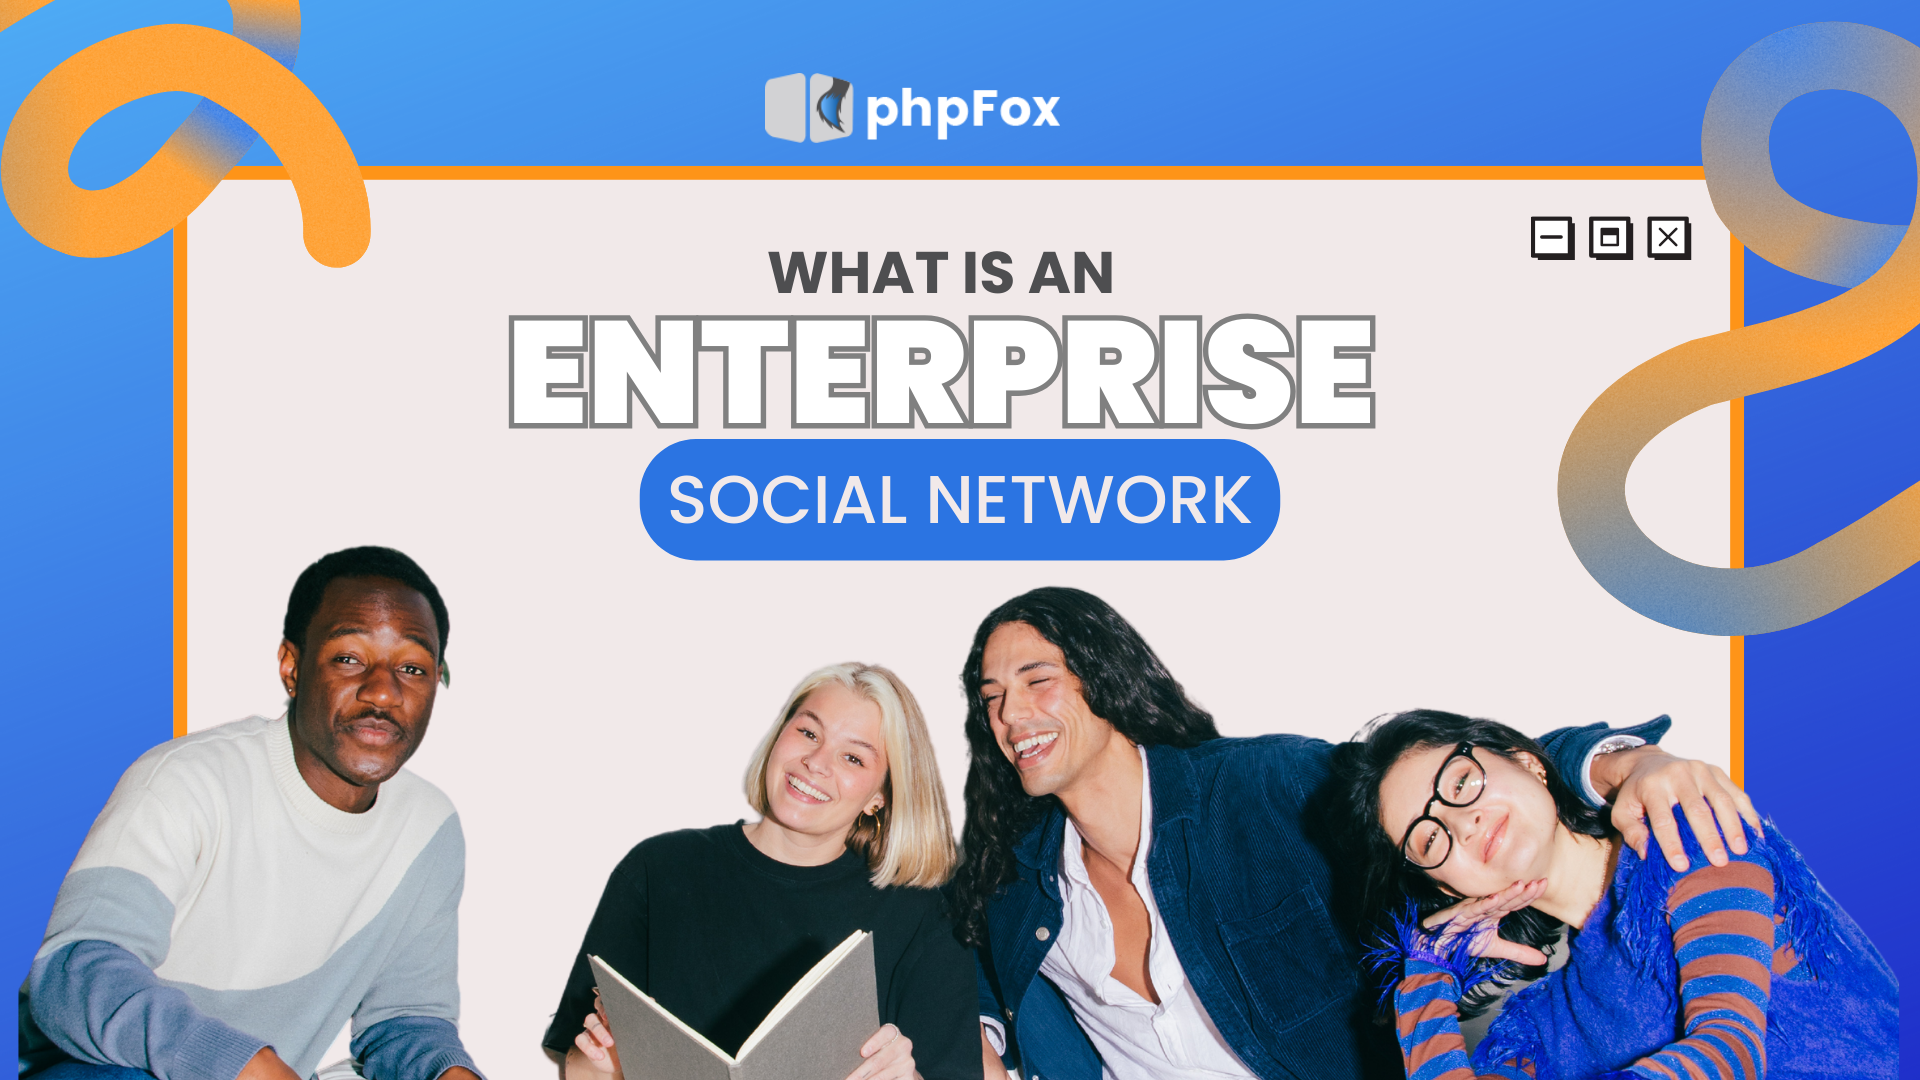 WHAT IS AN ENTERPRISE SOCIAL NETWORK?